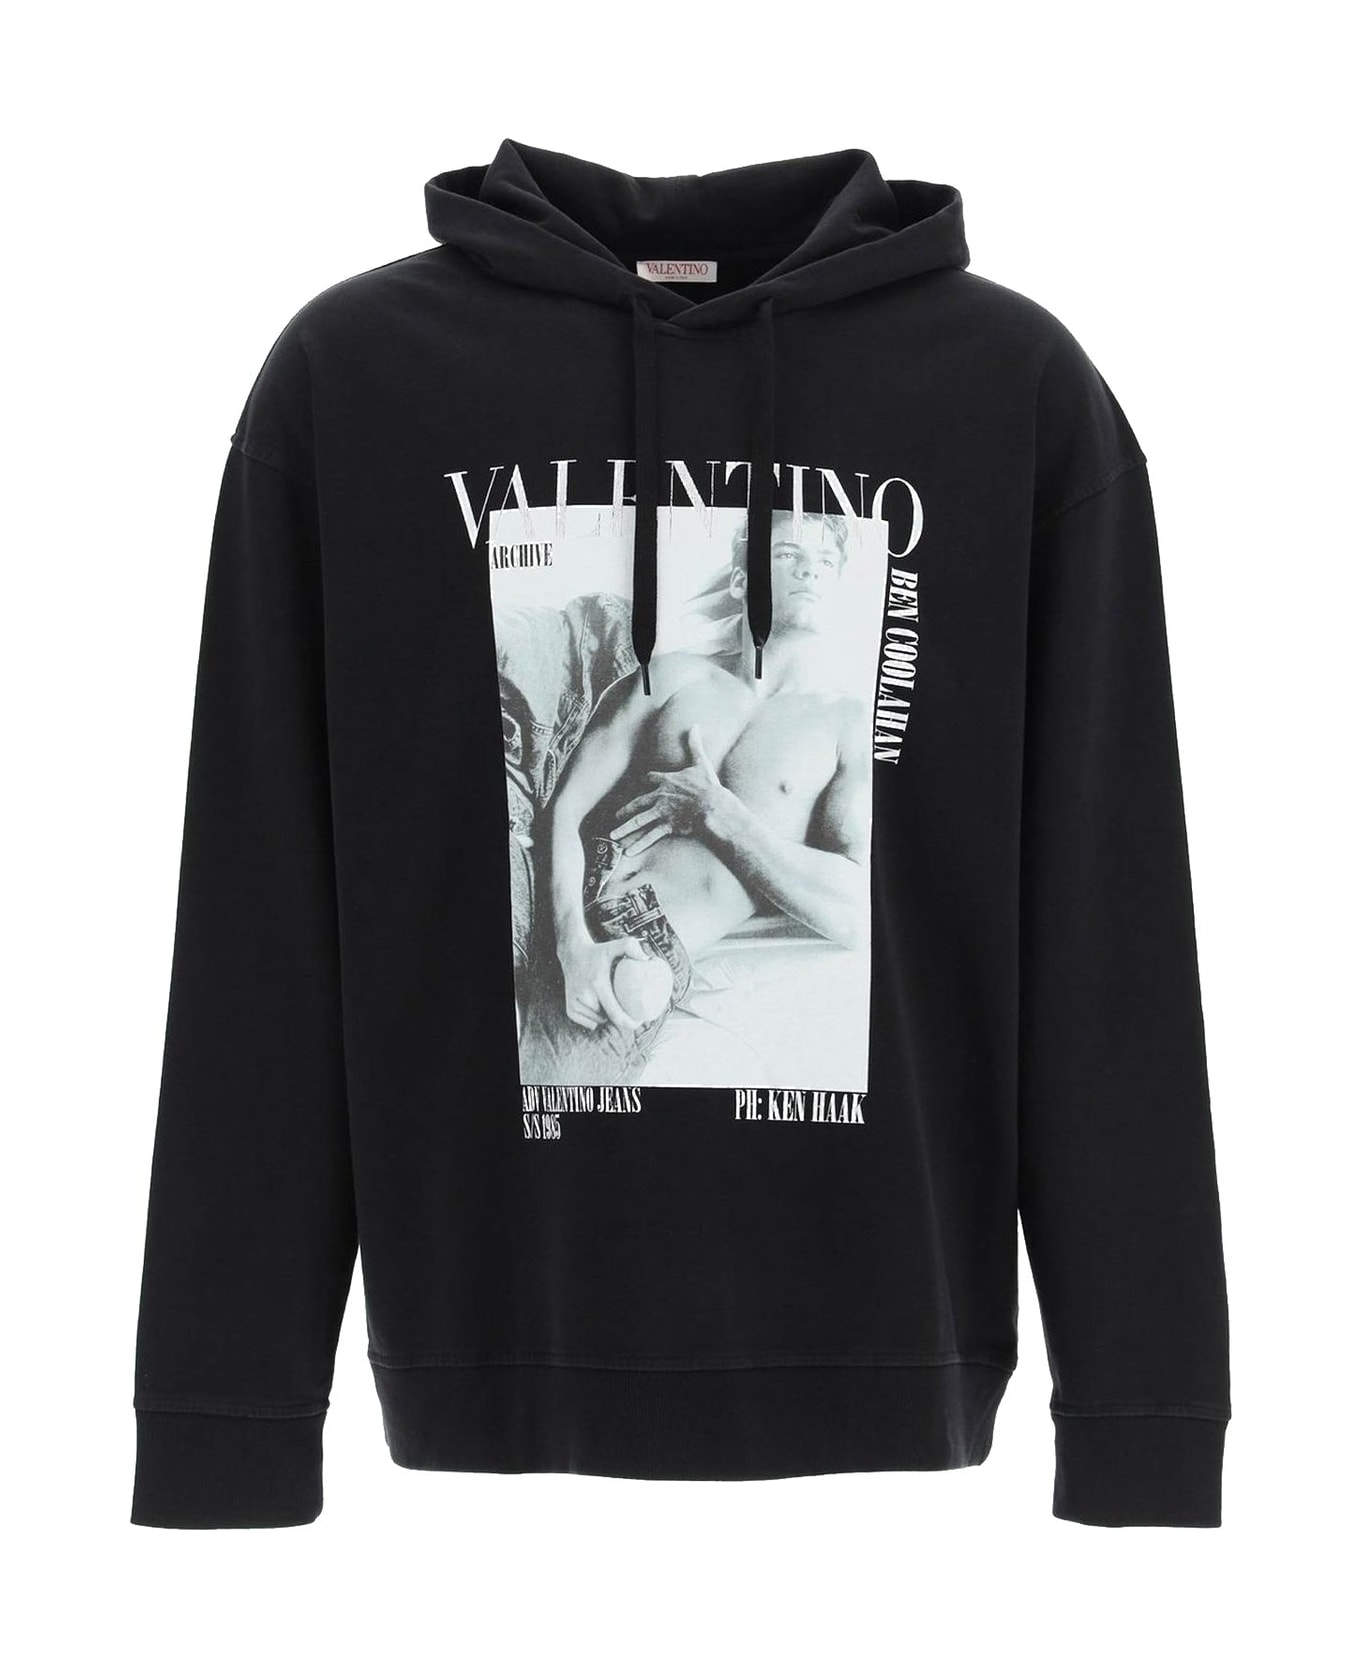 Valentino Graphic Printed Sweatshirt - Black